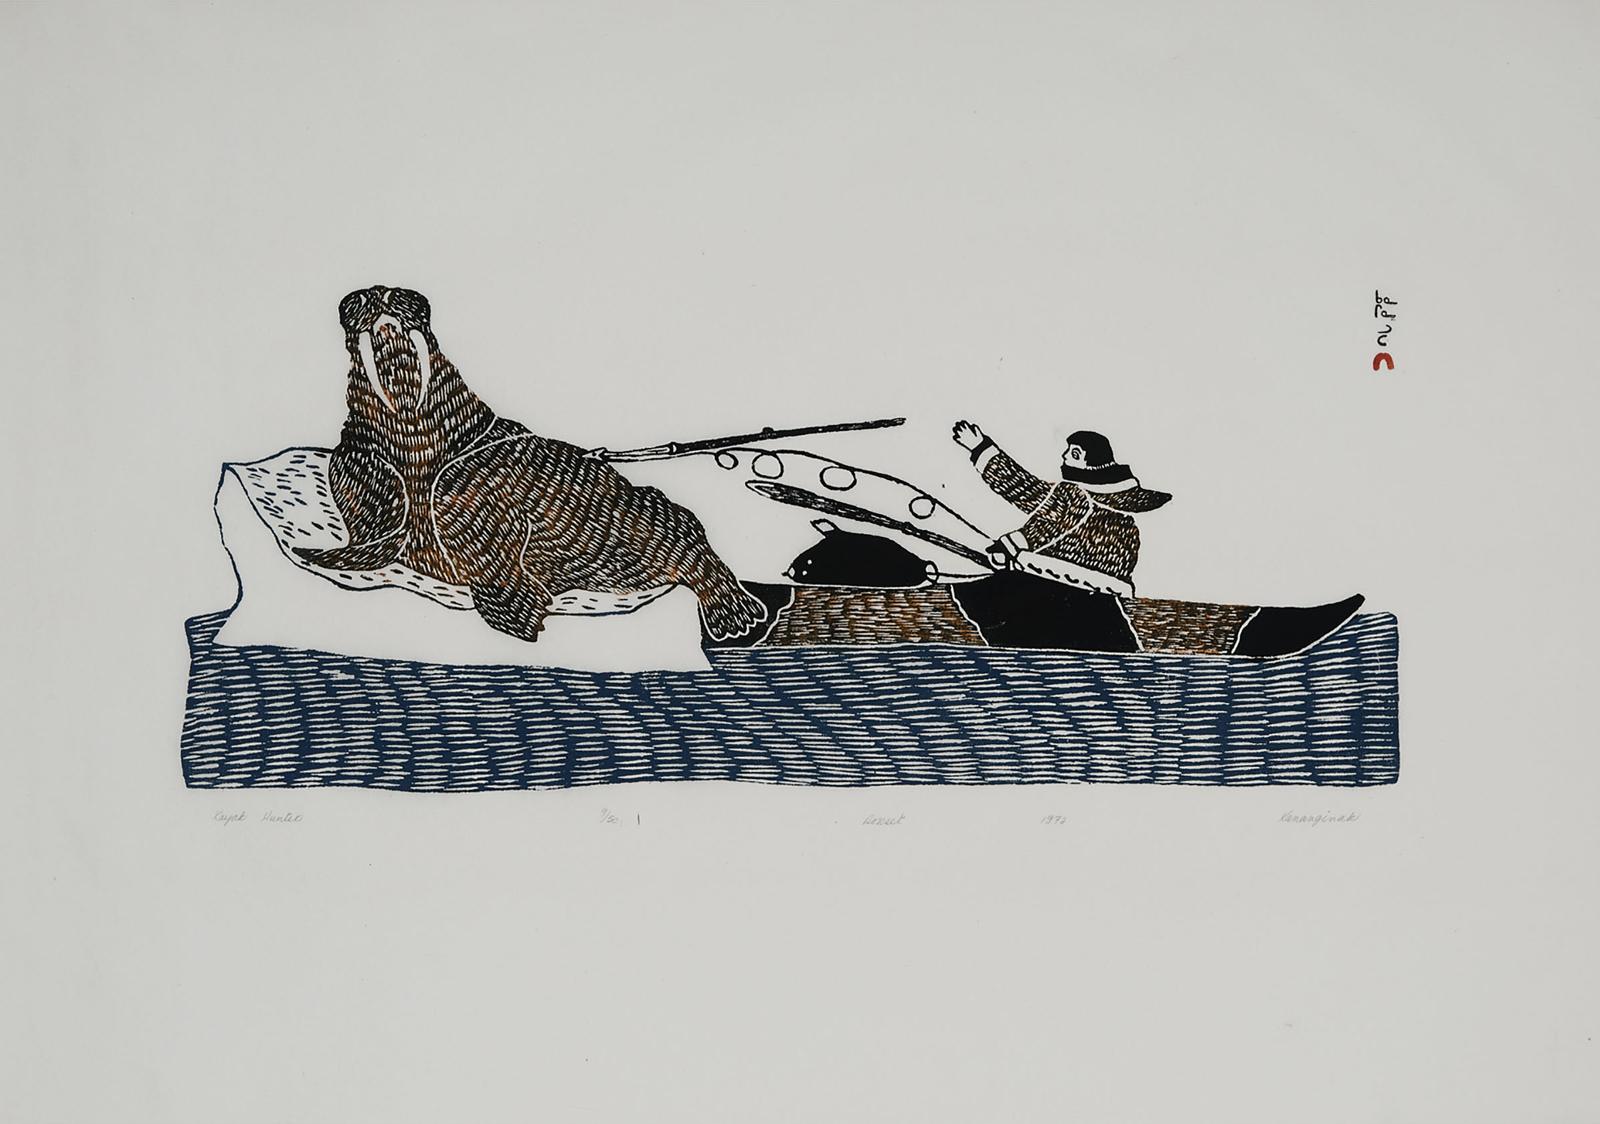 Kananginak Pootoogook (1935-2010) - Kayak Hunter